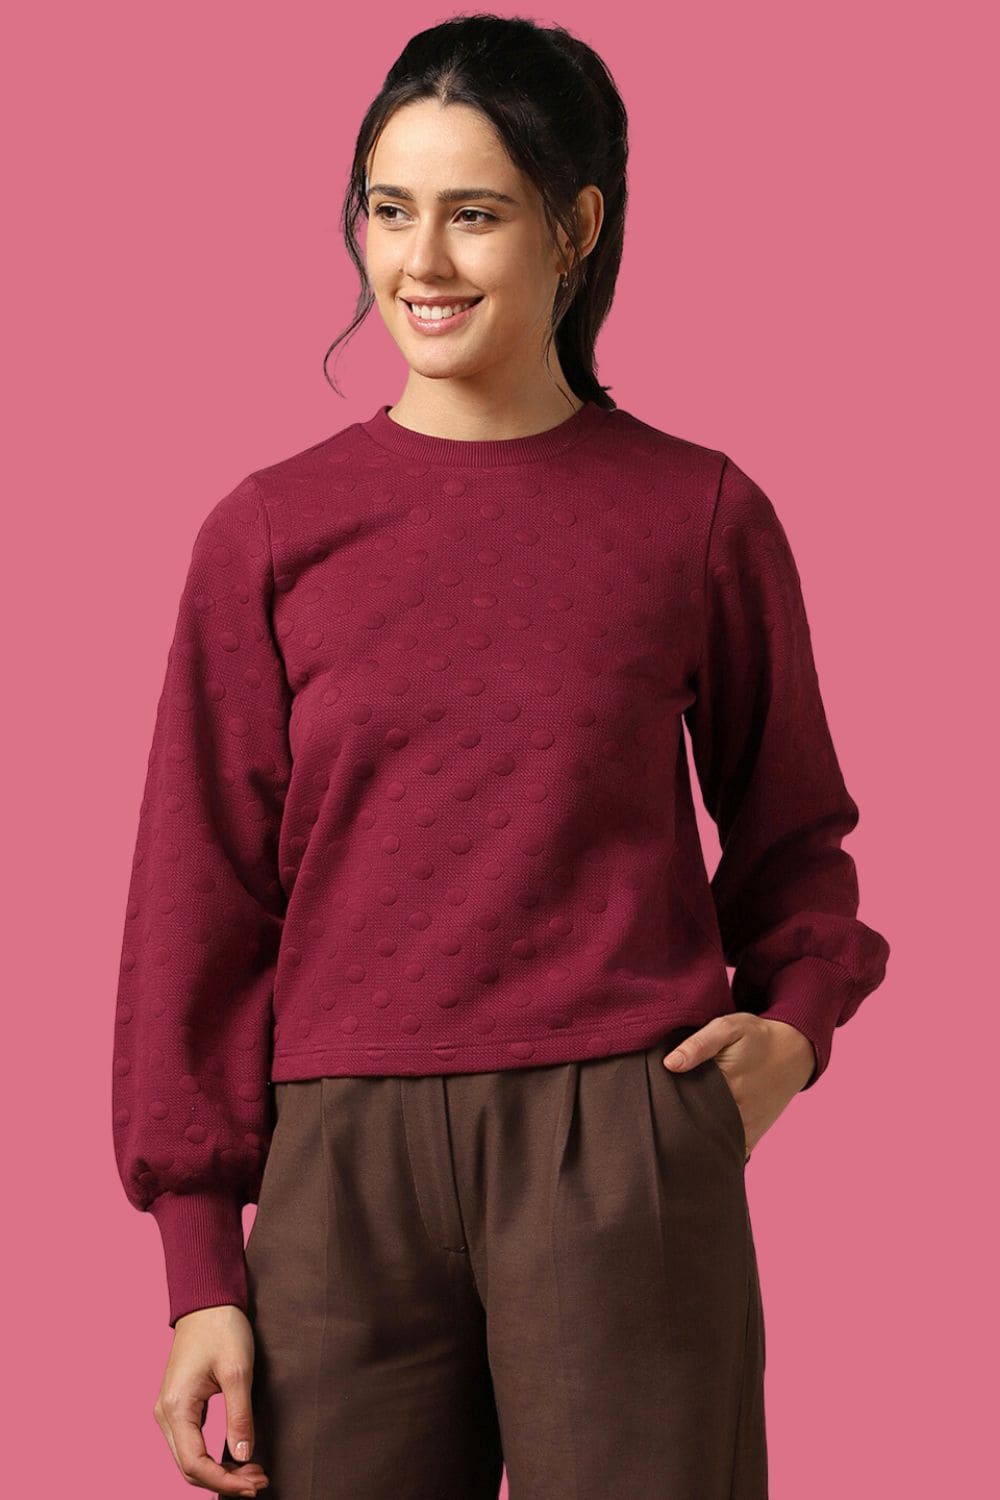 Everyday Textured Sweatshirts – Nobero